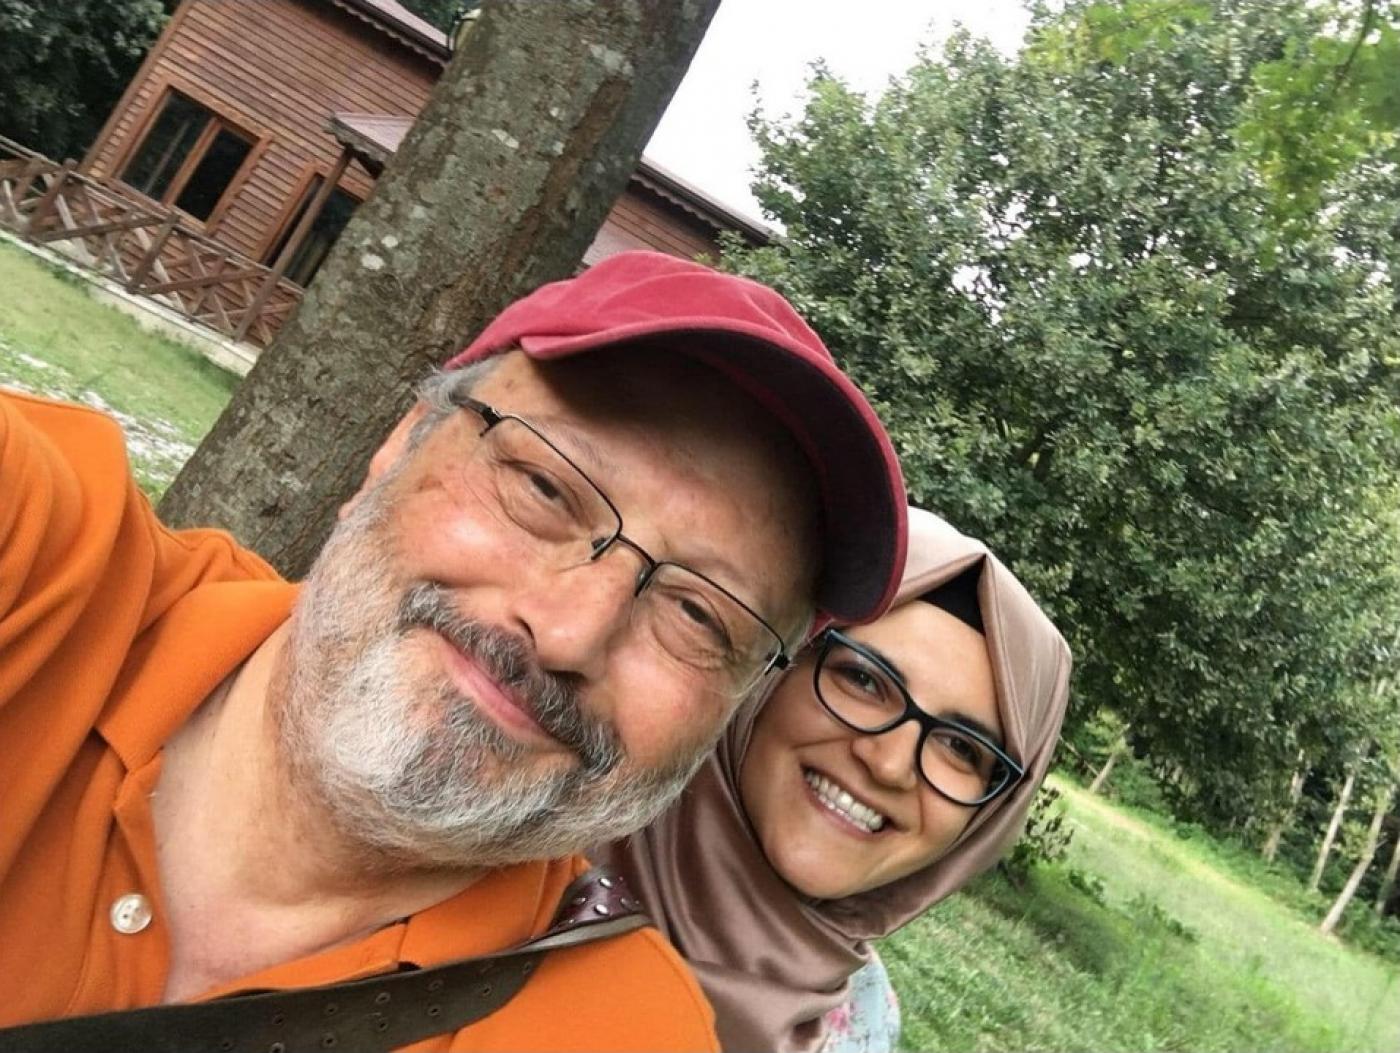 Jamal Khashogg pictured with his fiancee Hatice Cengiz (Hatice Cengiz)